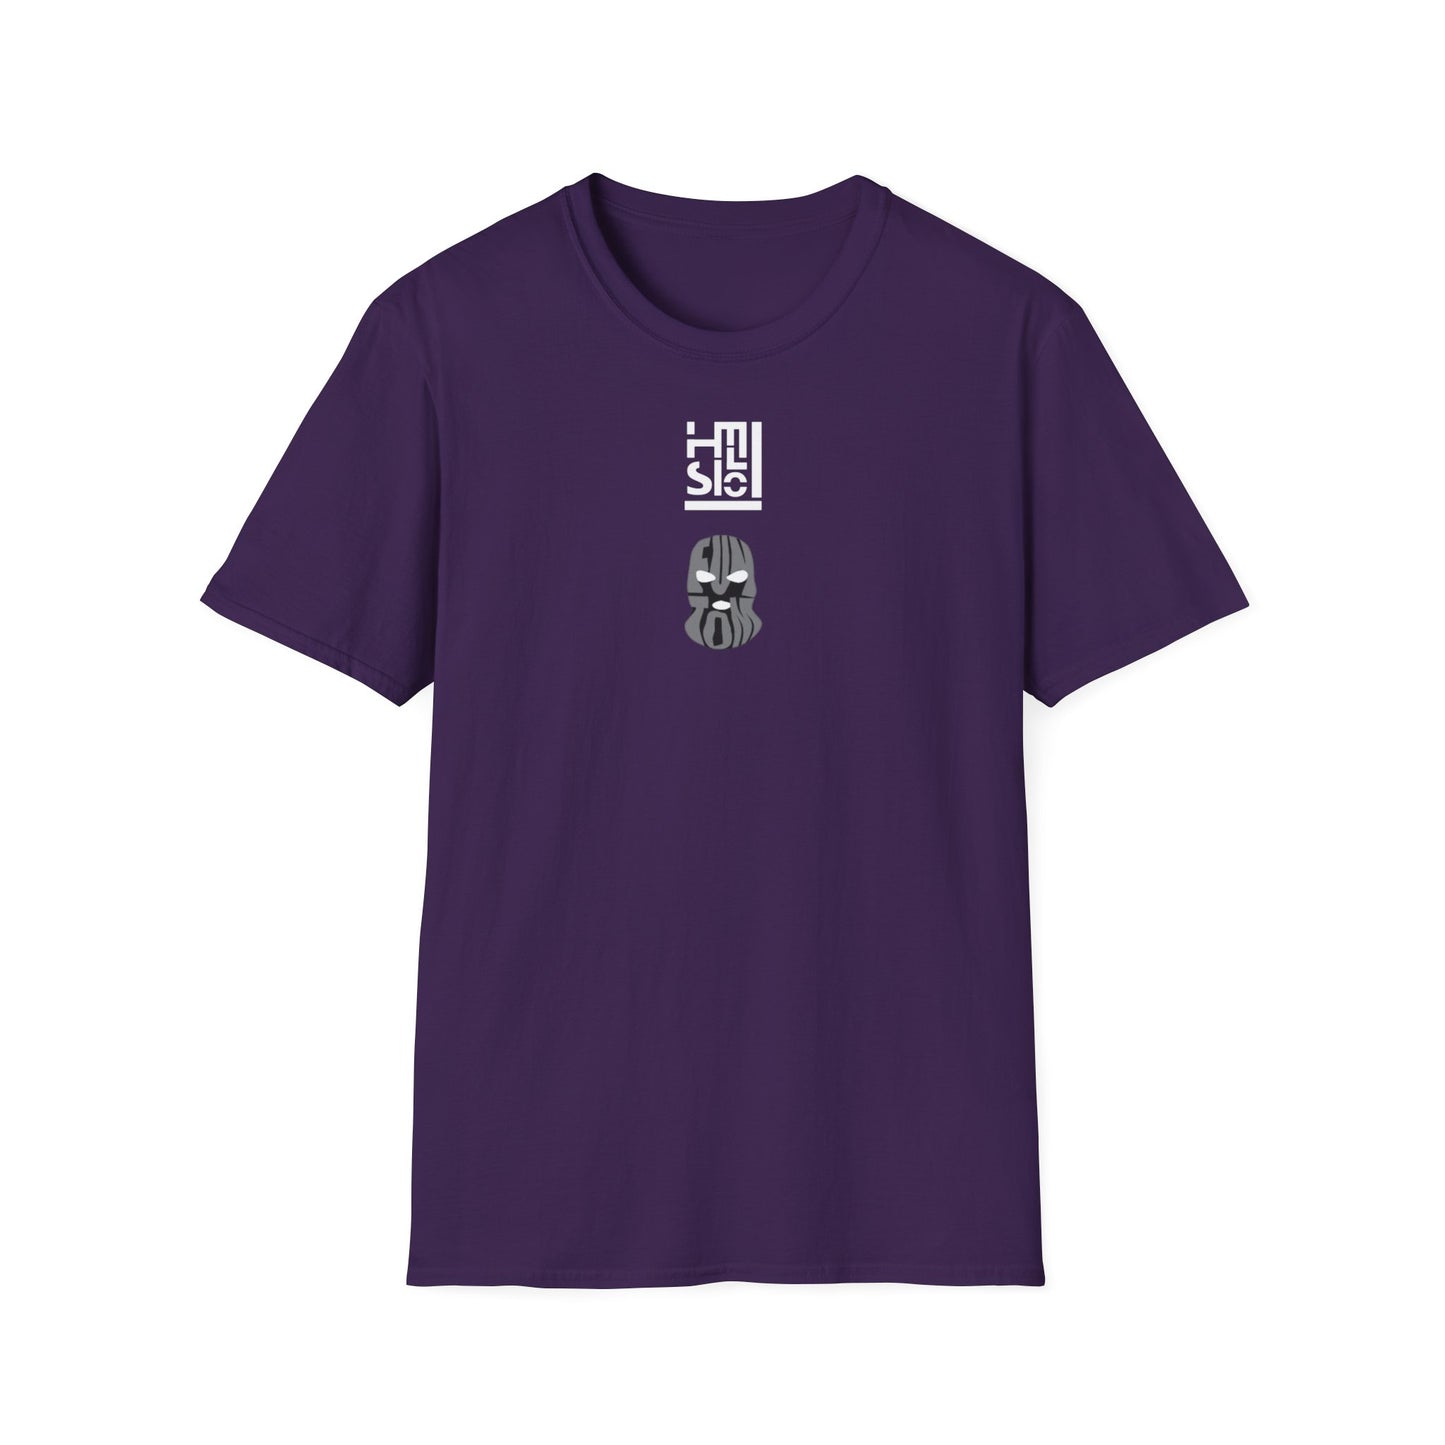 Fantom x Helios T-Shirt (#5)